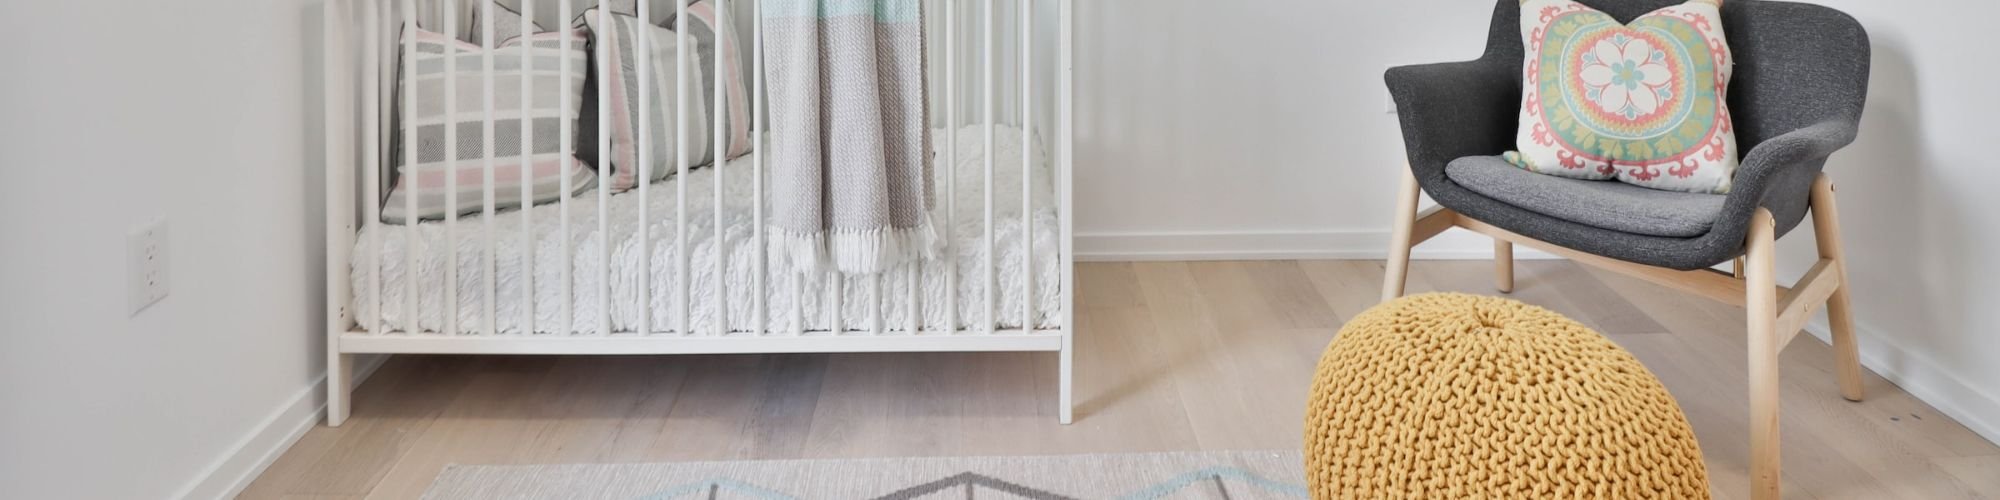 Nursery with baby crib and vinyl plank flooring